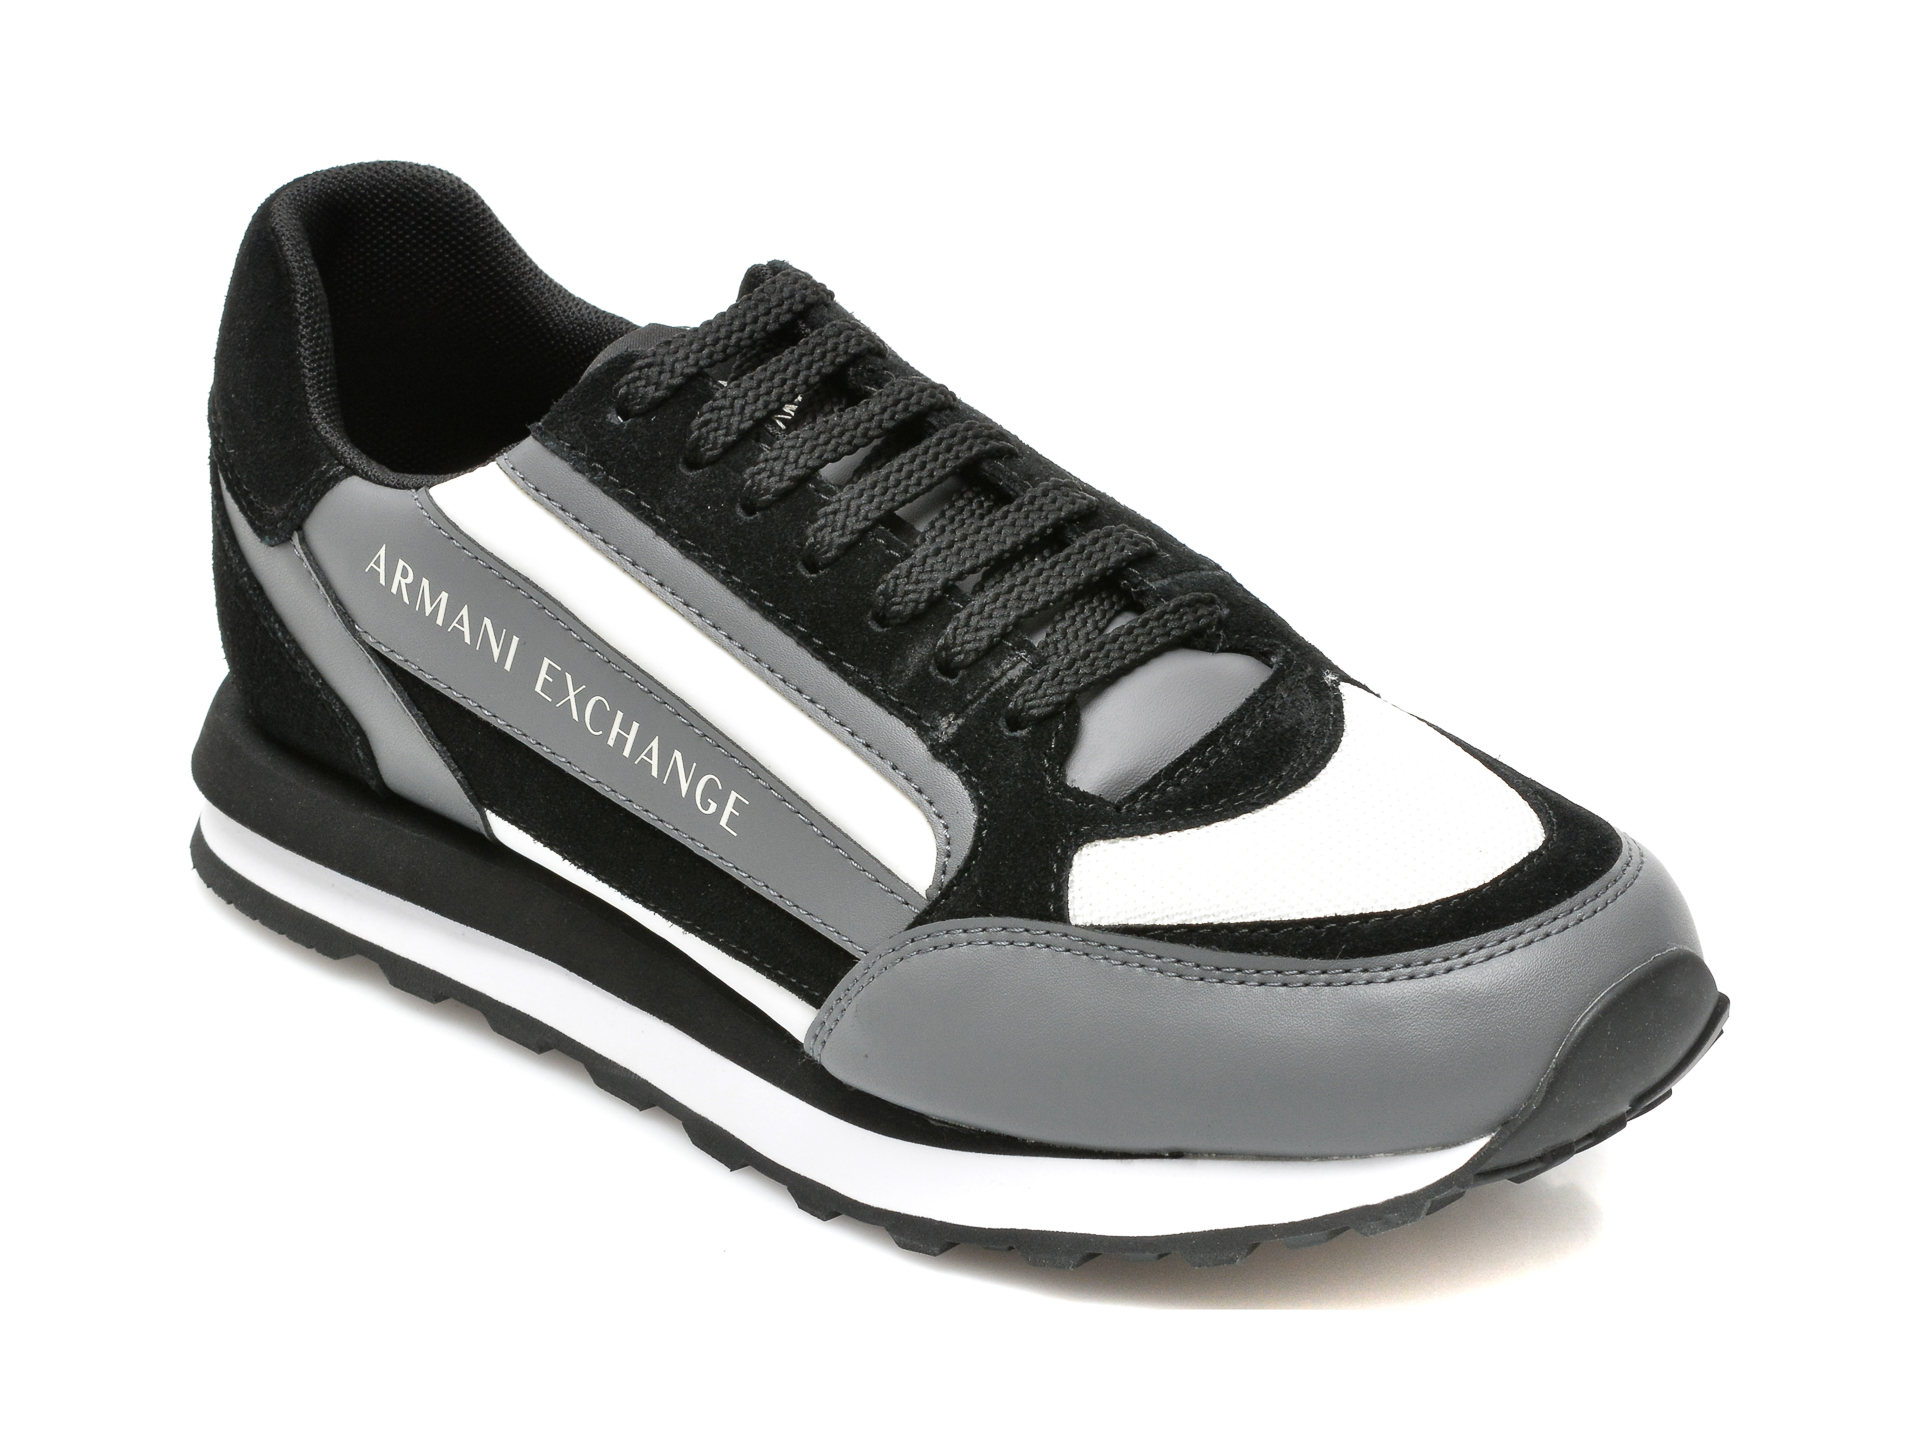 Pantofi sport ARMANI EXCHANGE negri, XUX101, din material textil si piele naturala Armani Exchange